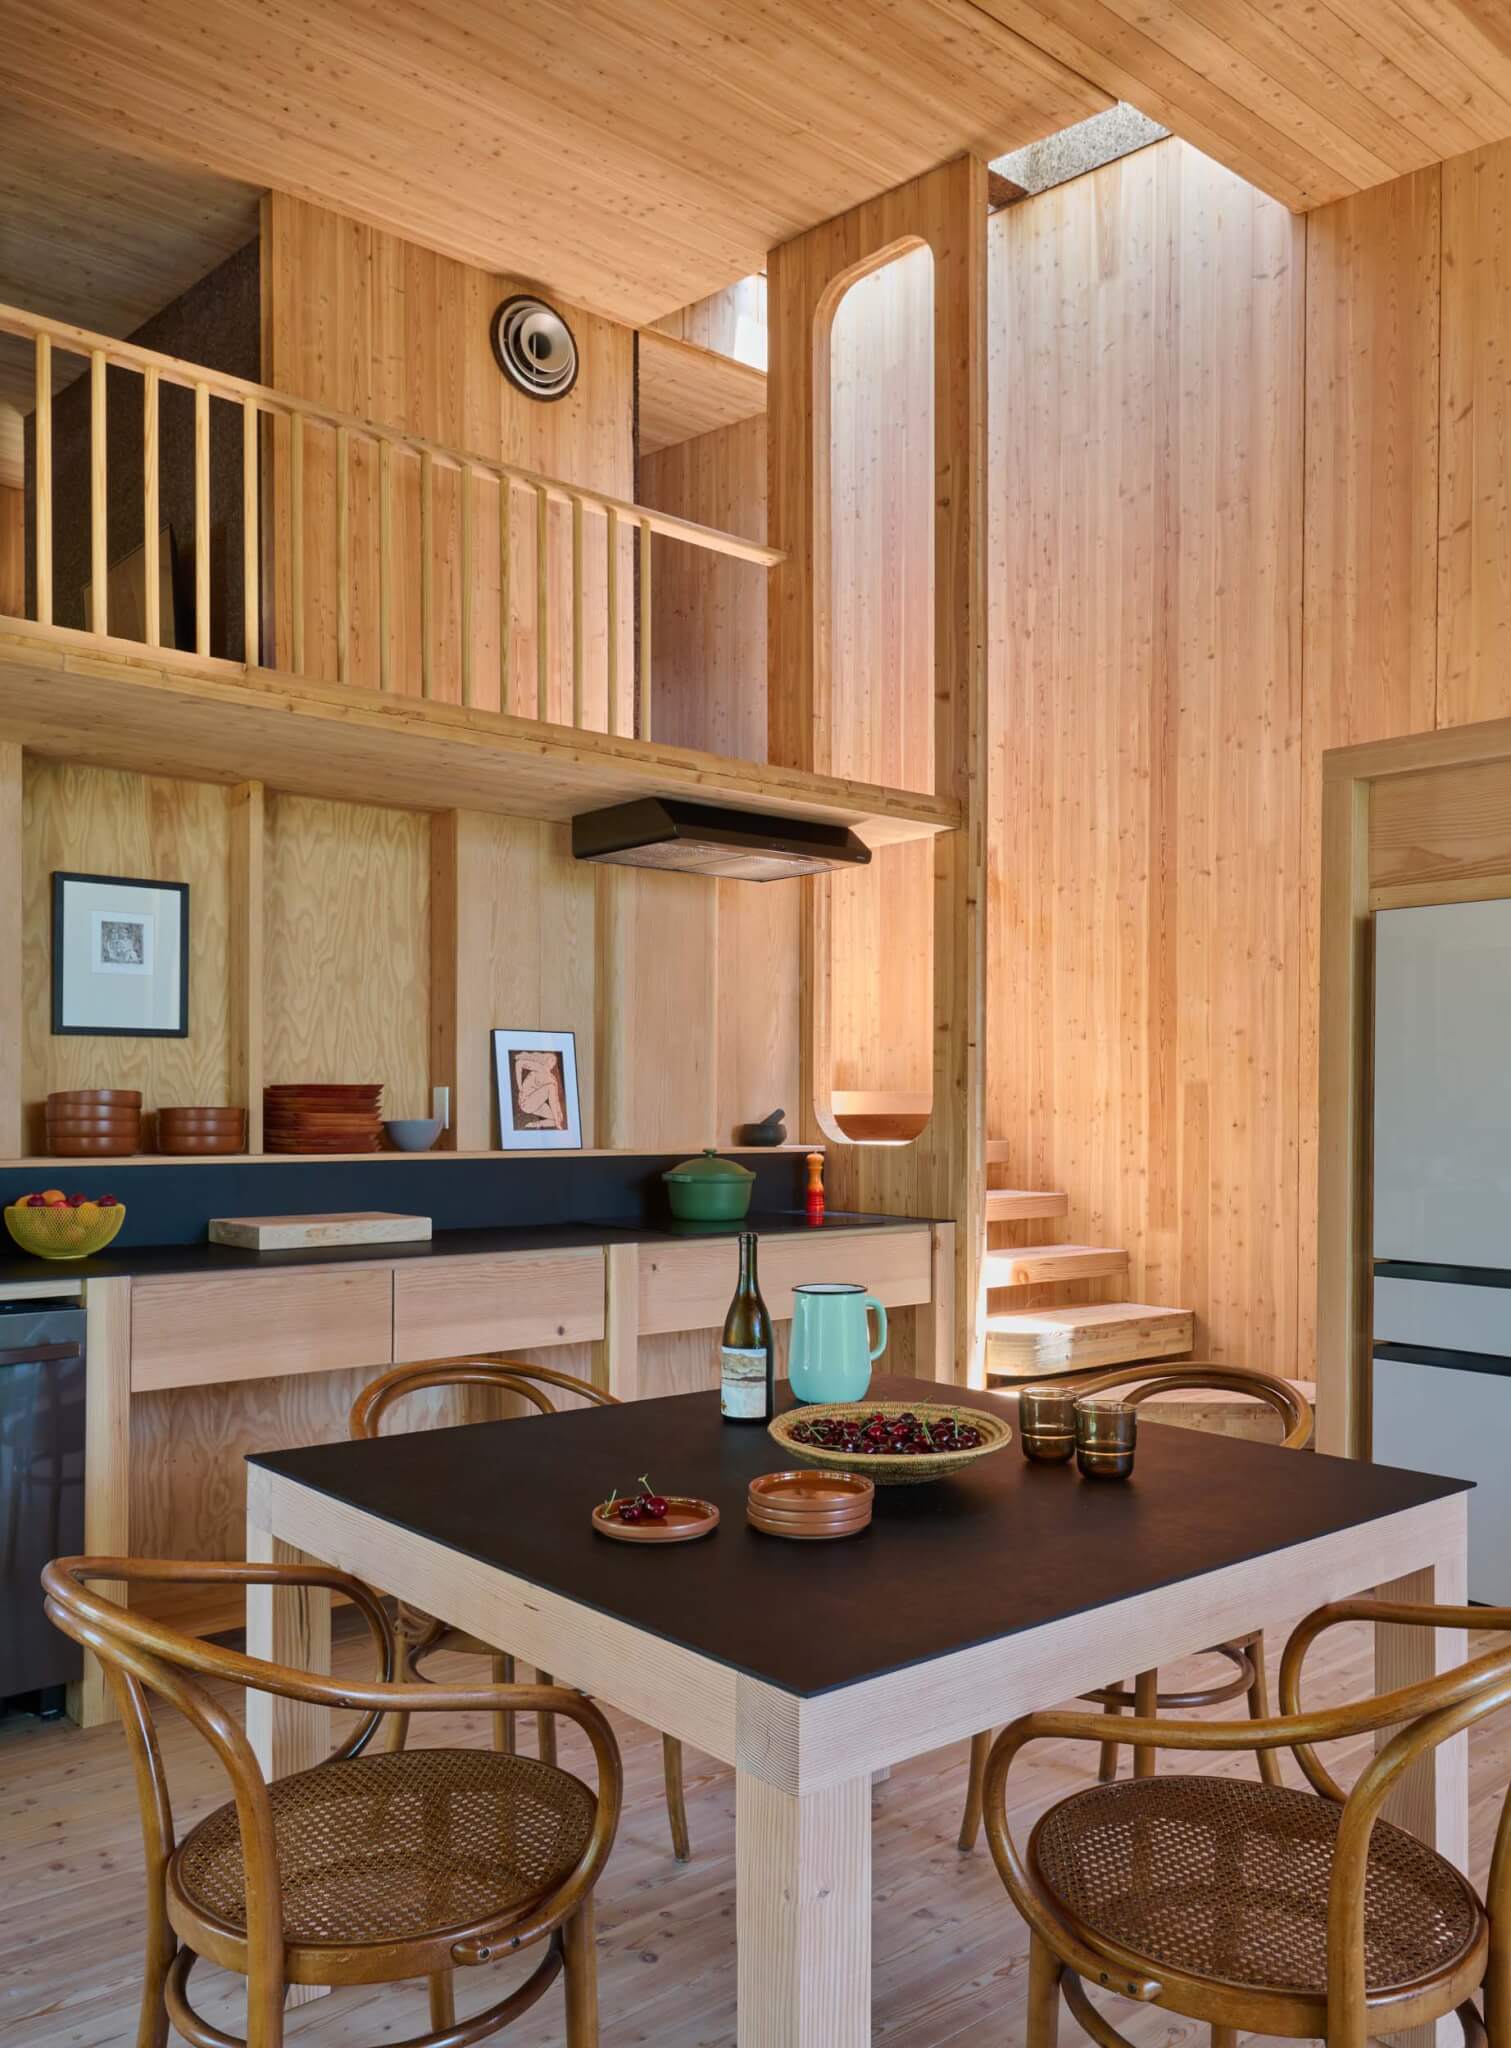 wood kitchen and wood interior balcony level